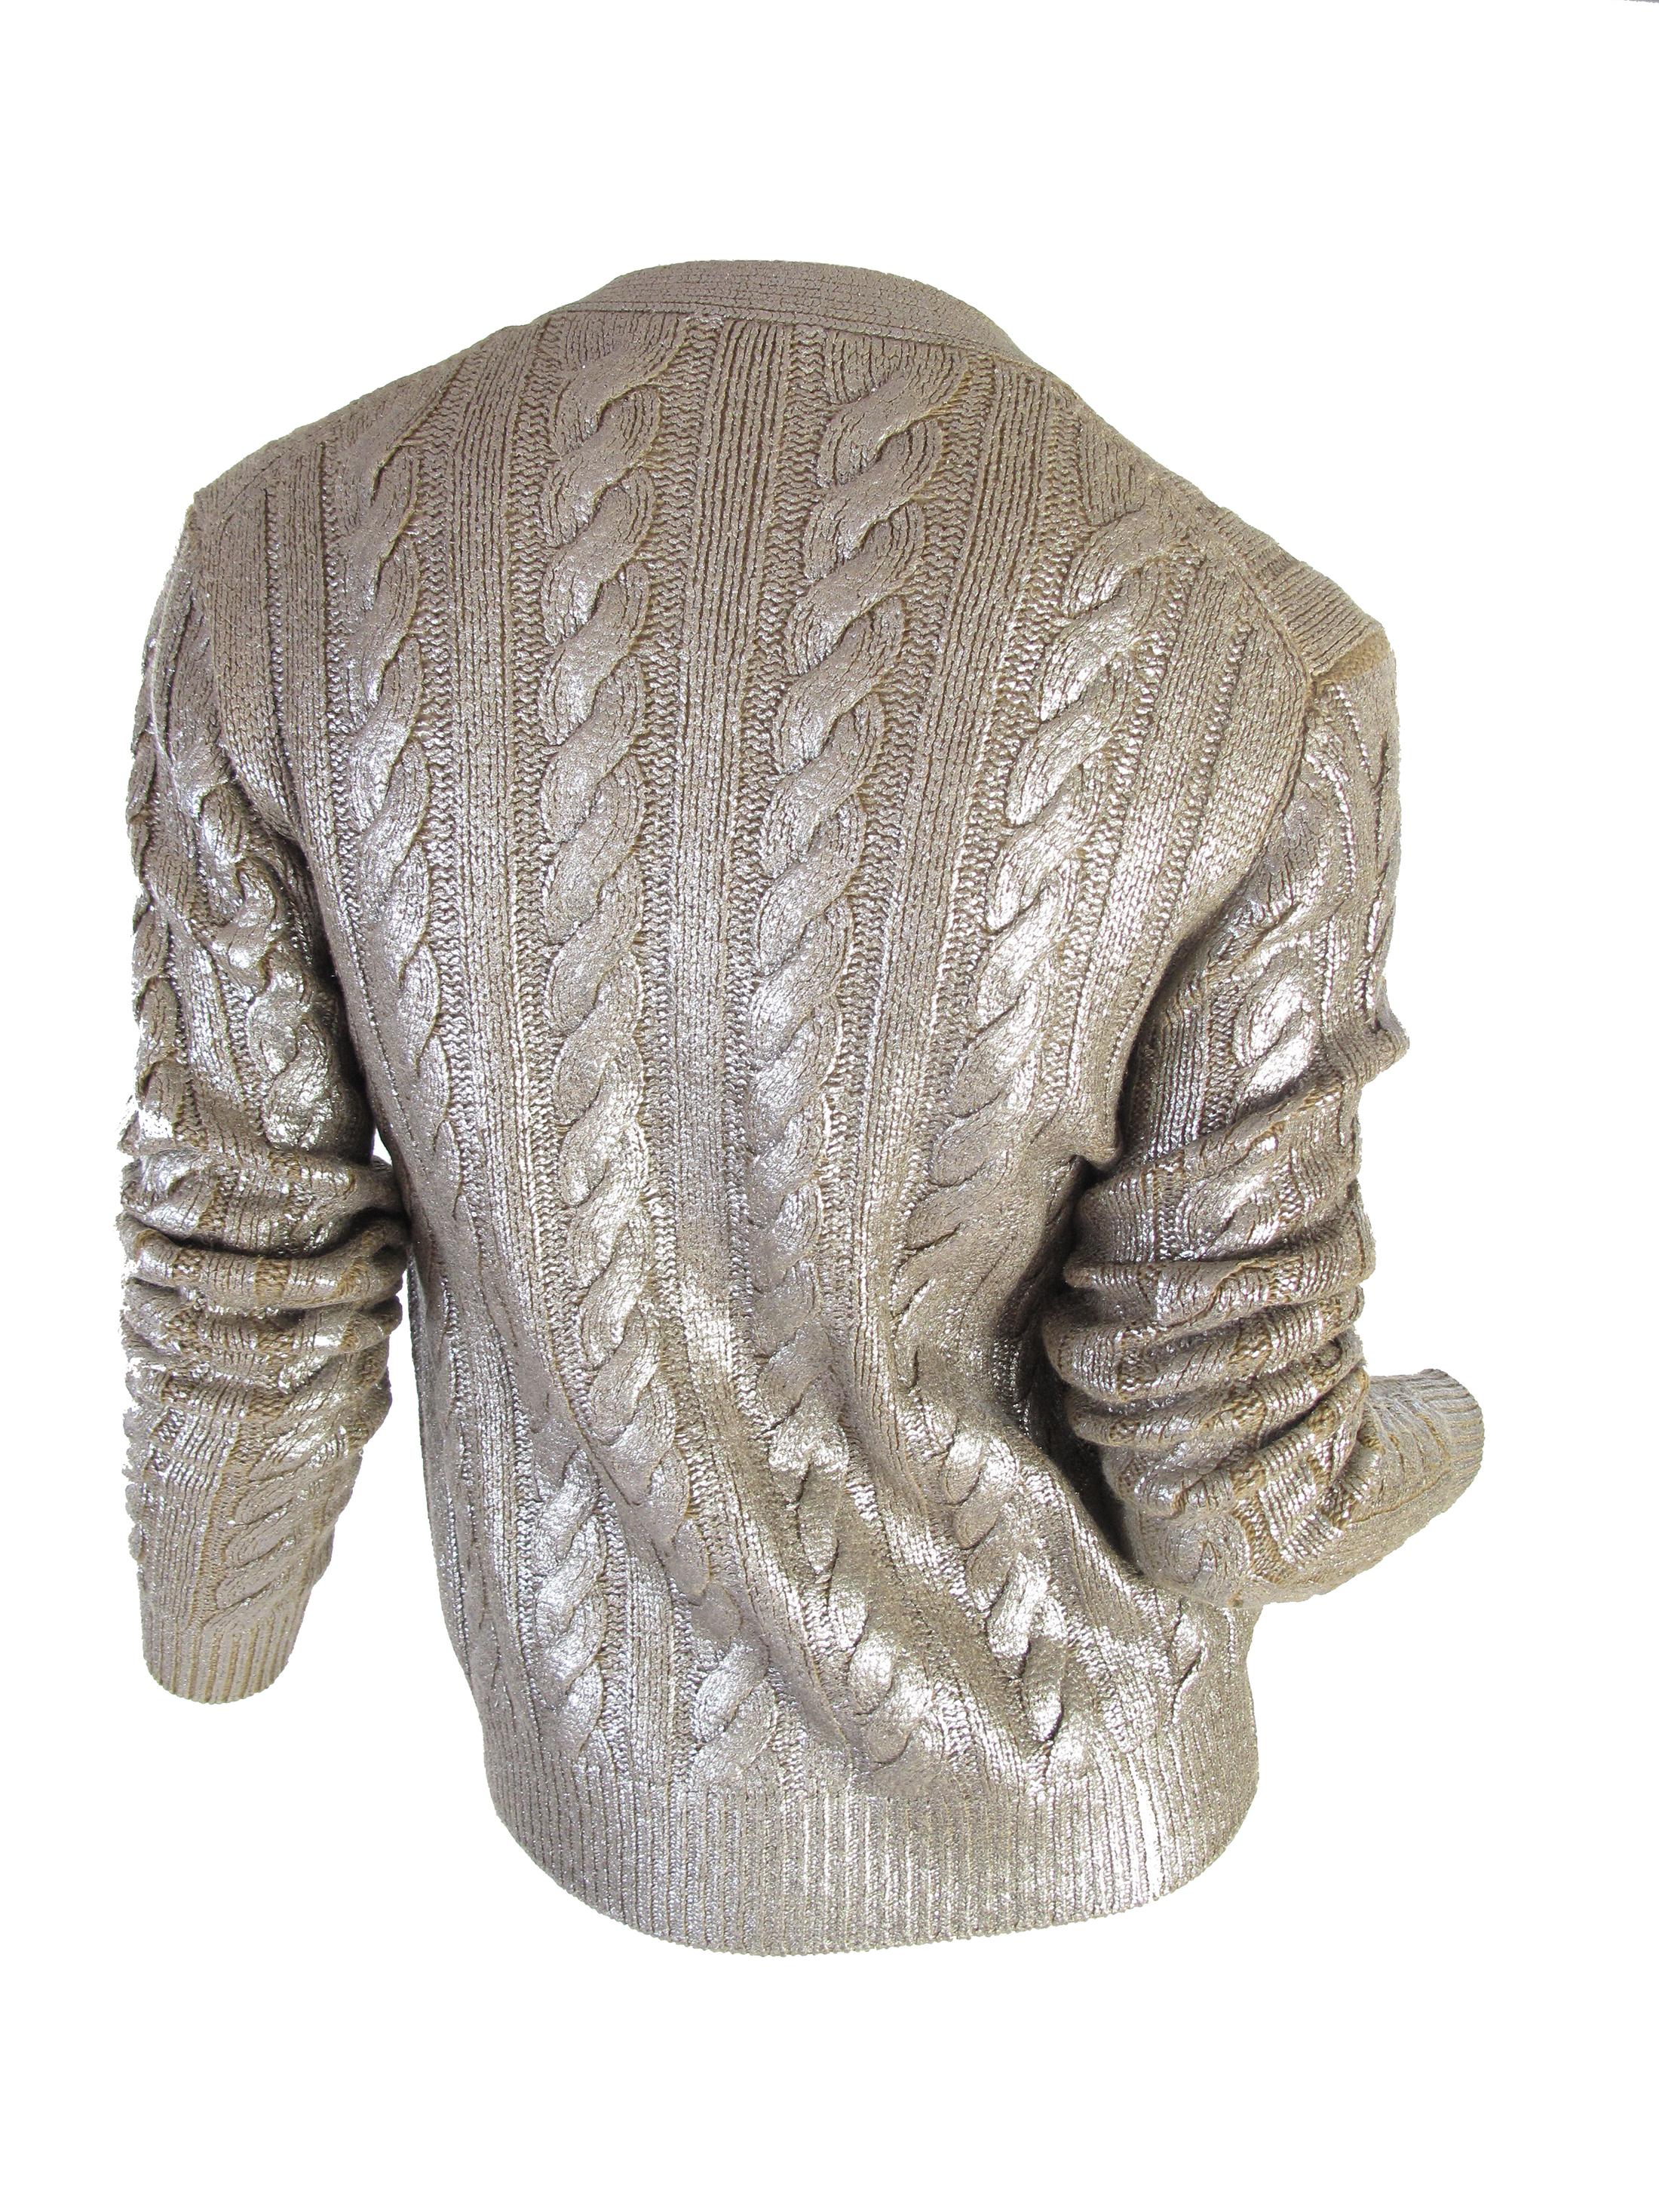 Prada metallic knit cardigan. Condition: very good. Size small
